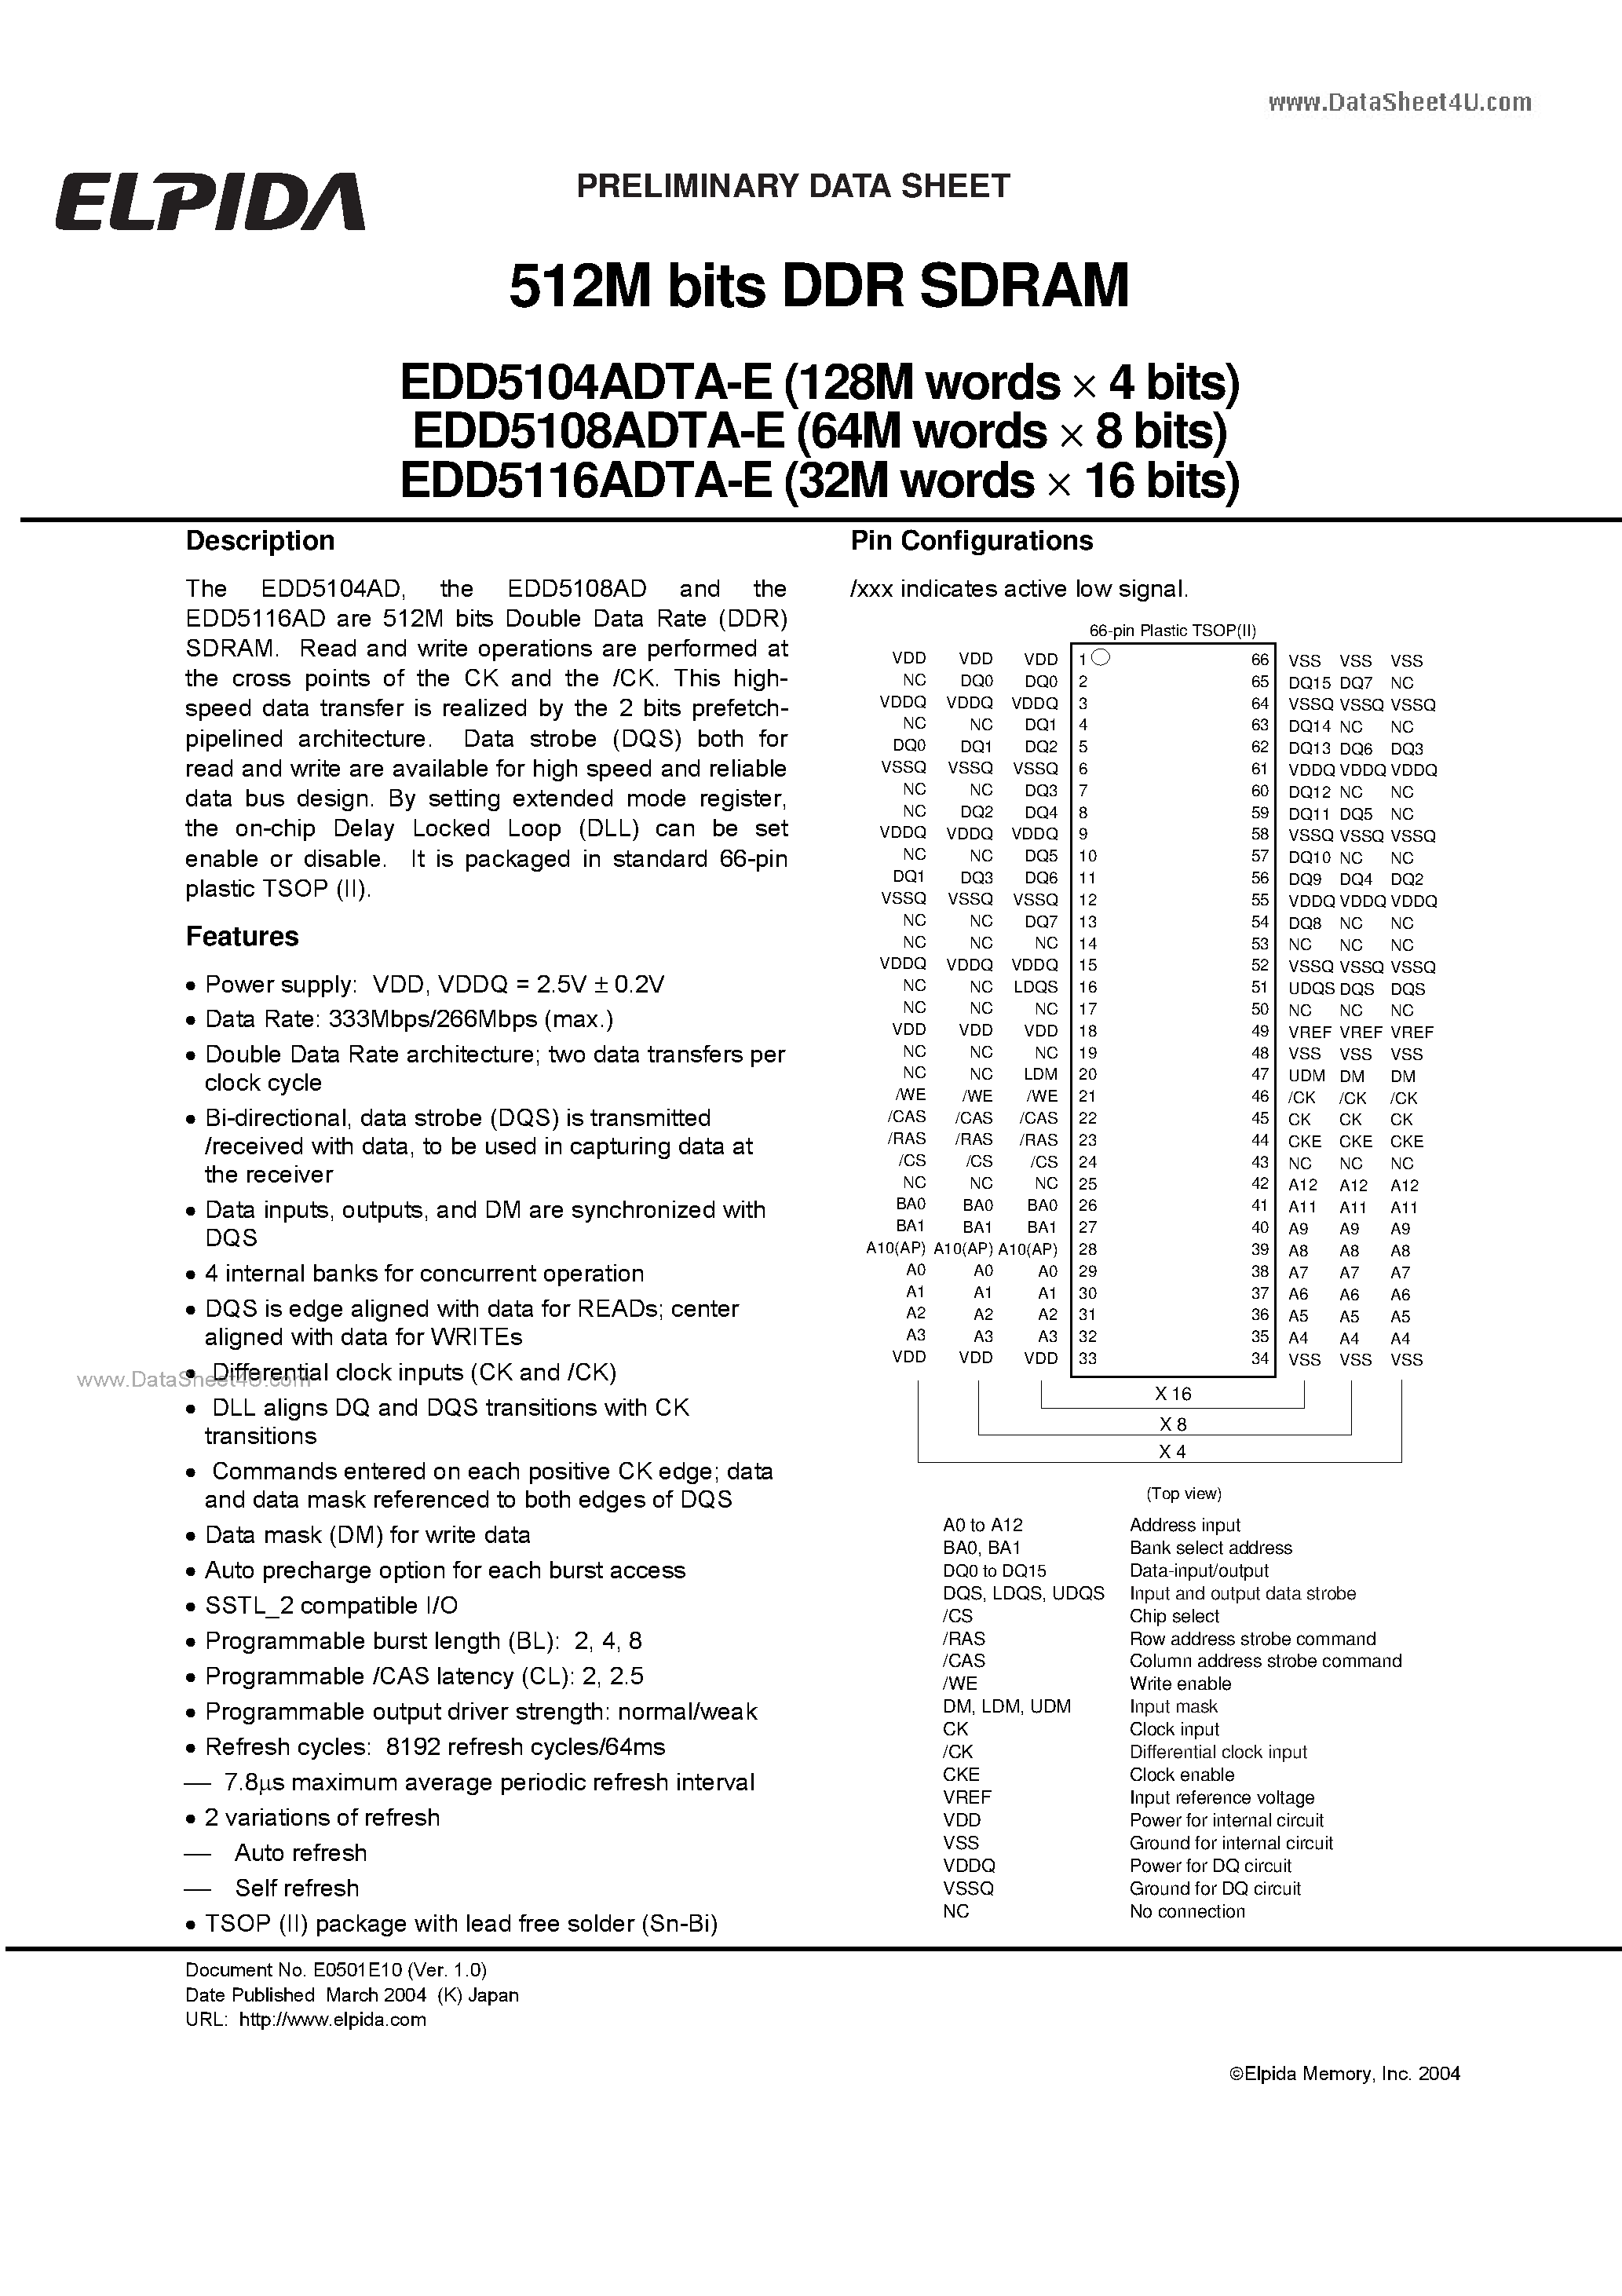 Datasheet EDD5104ADTA-E - 512M bits DDR SDRAM page 1